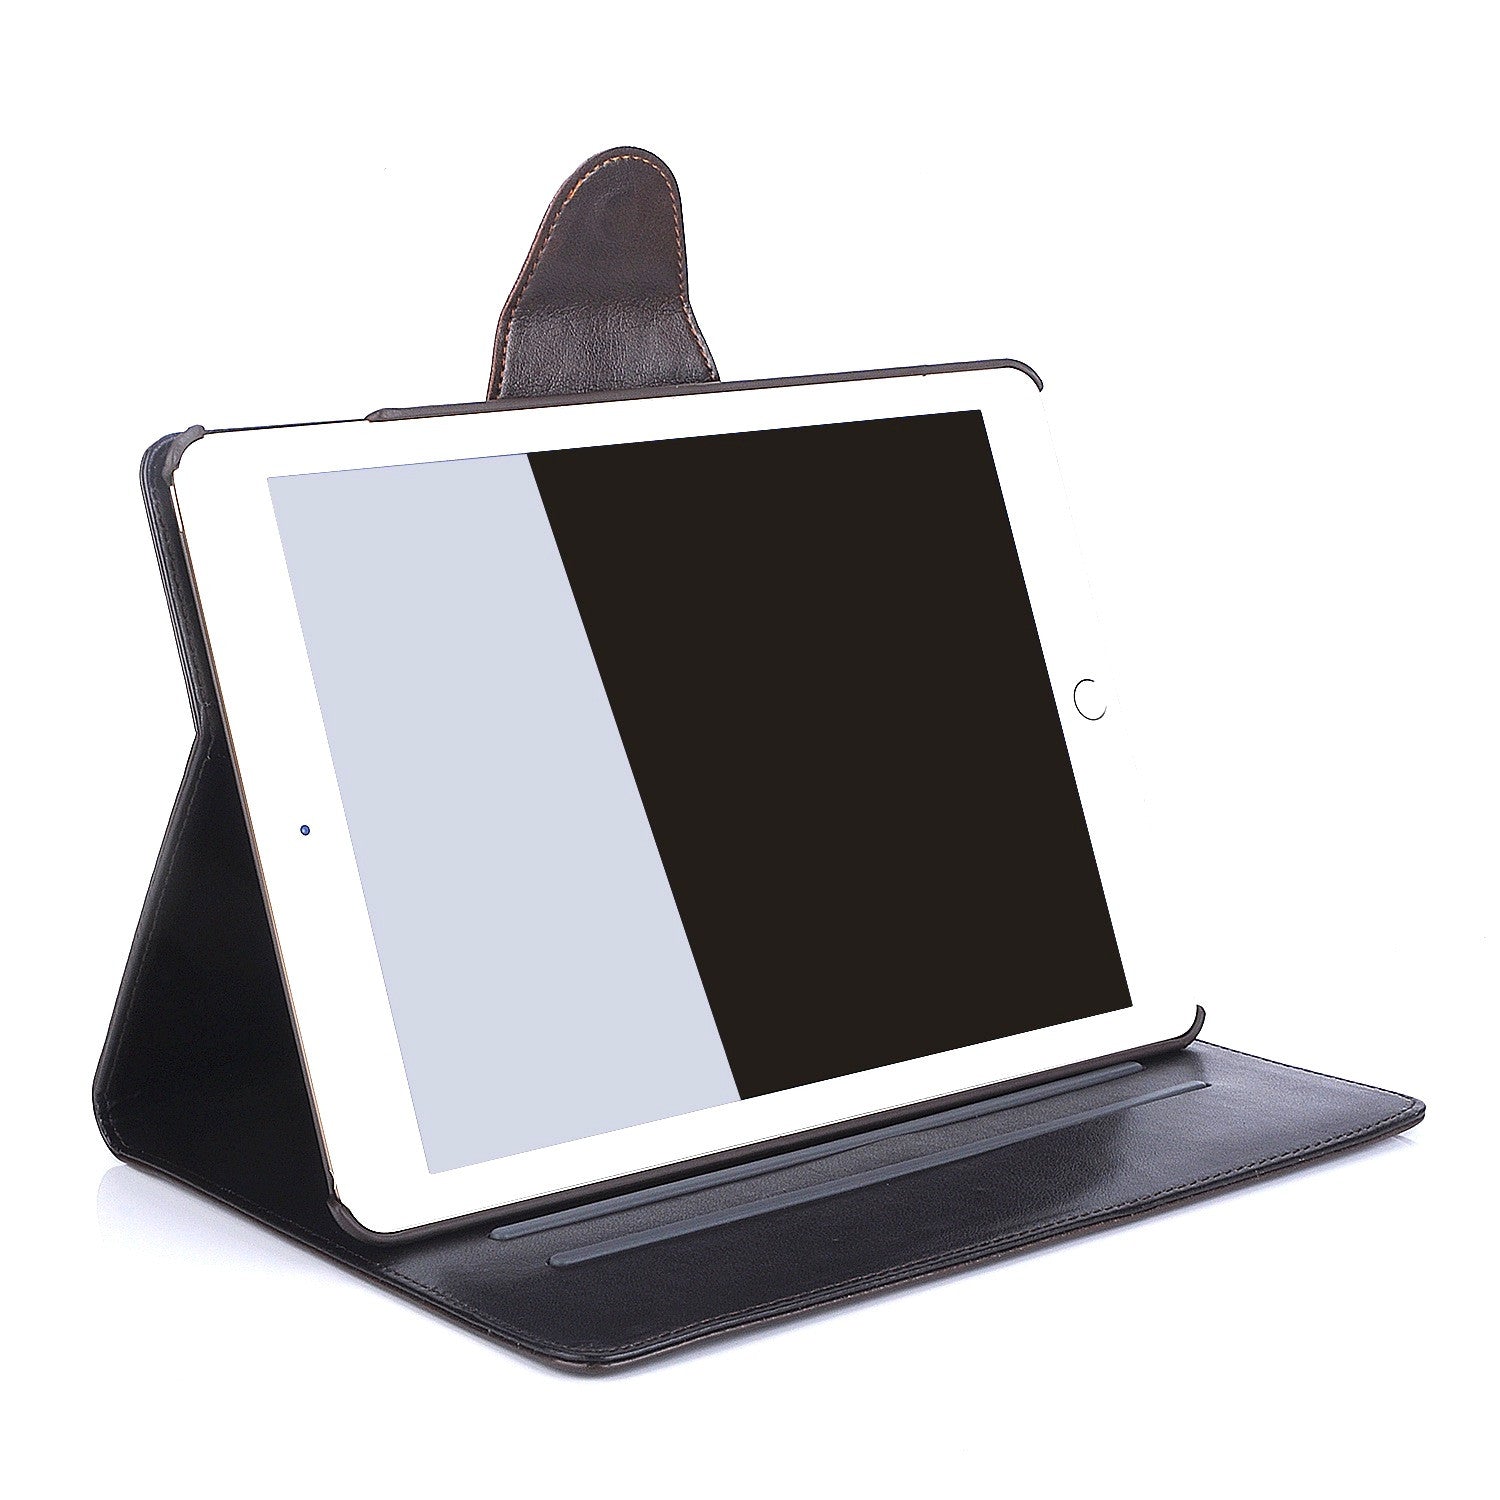 Bracevor Smart Leather Book Case Flip Cover for Apple iPad Air 2 - Brown